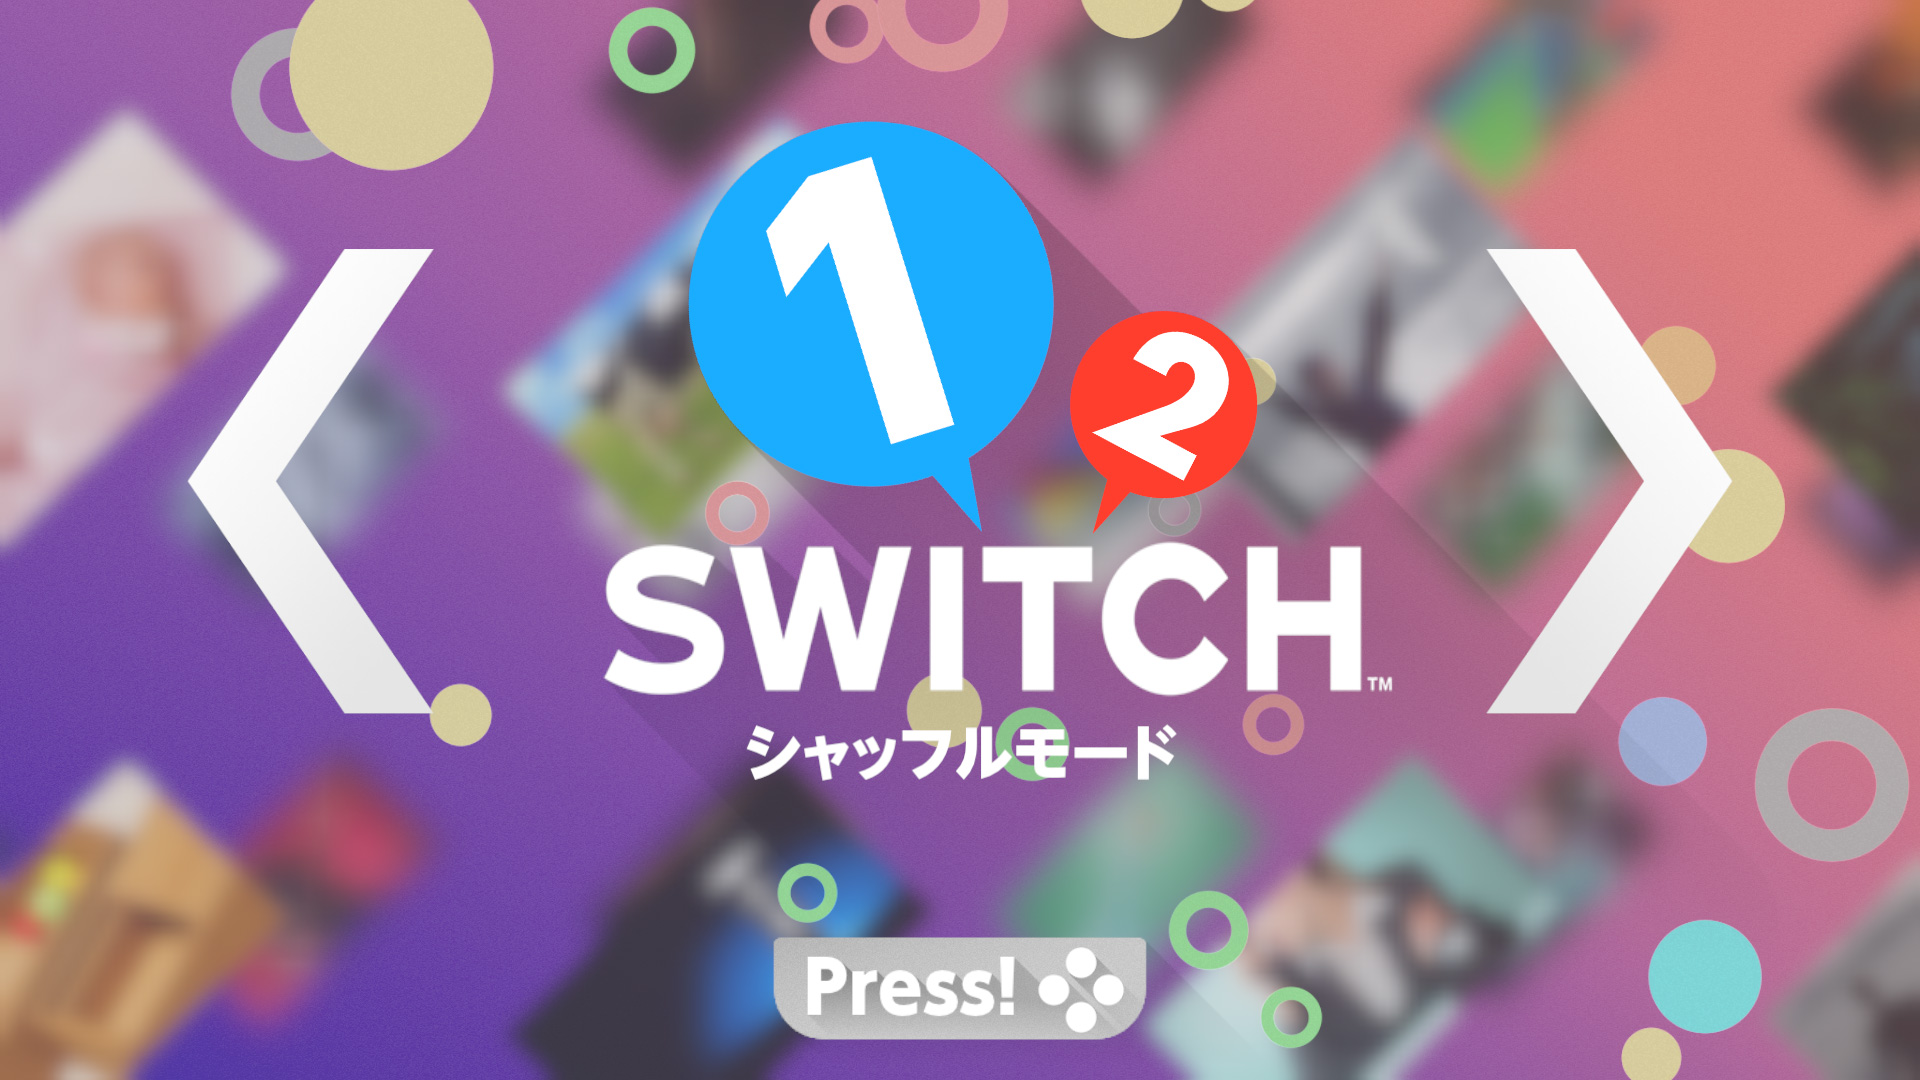 1 2 switch video